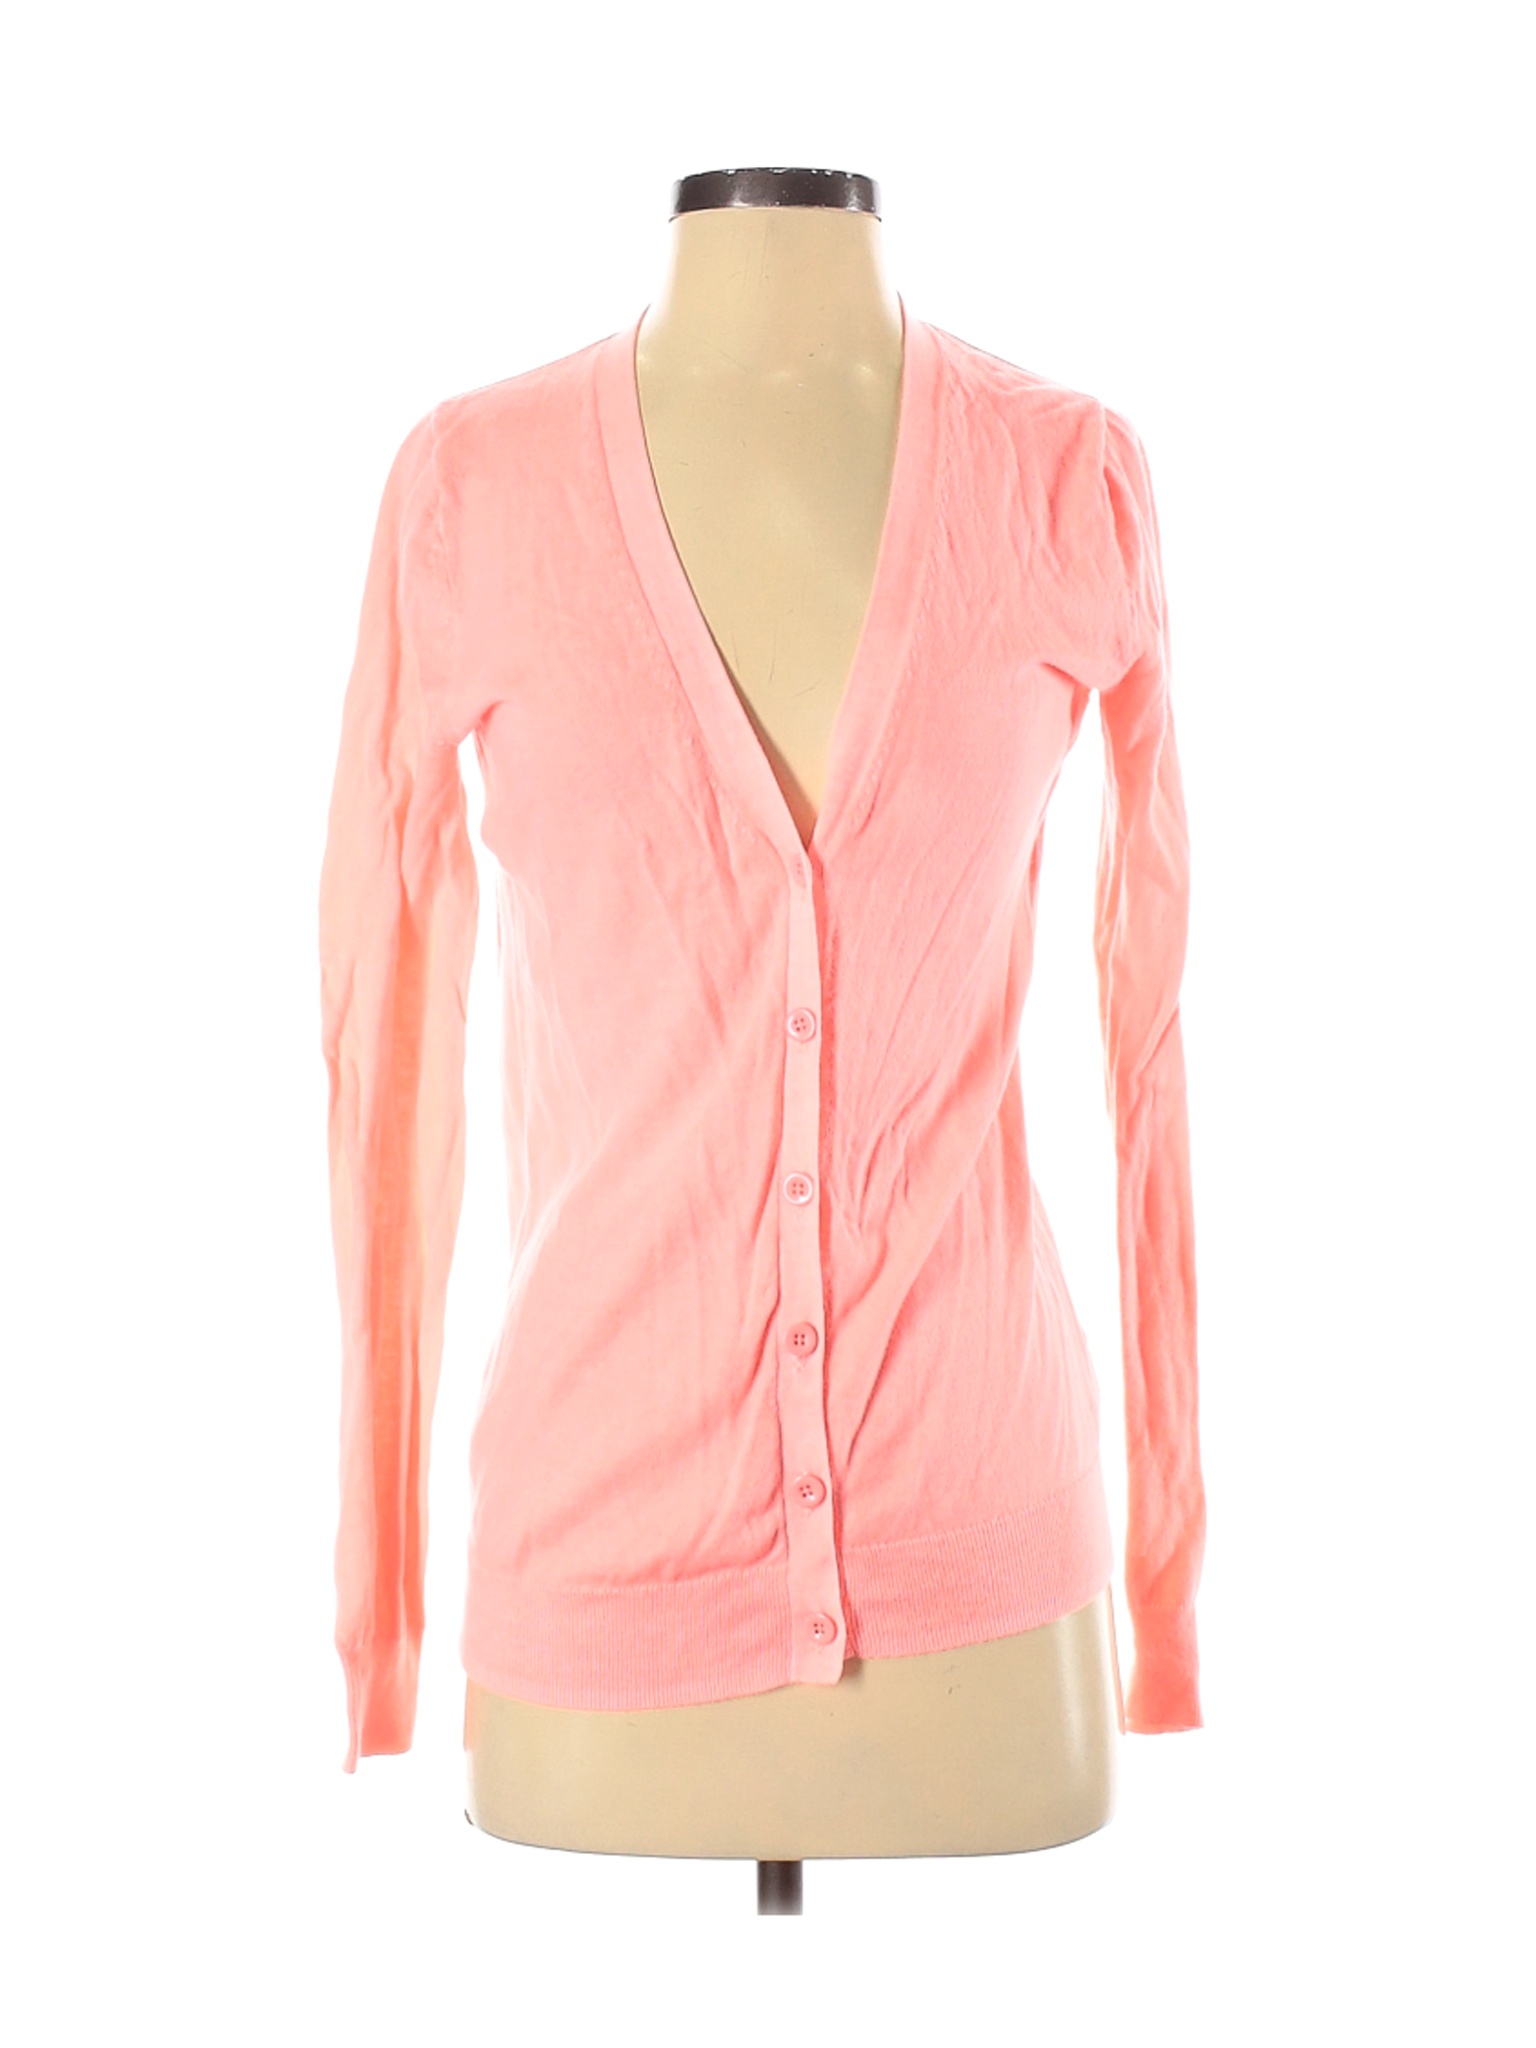 Gap Women Pink Cardigan XS | eBay